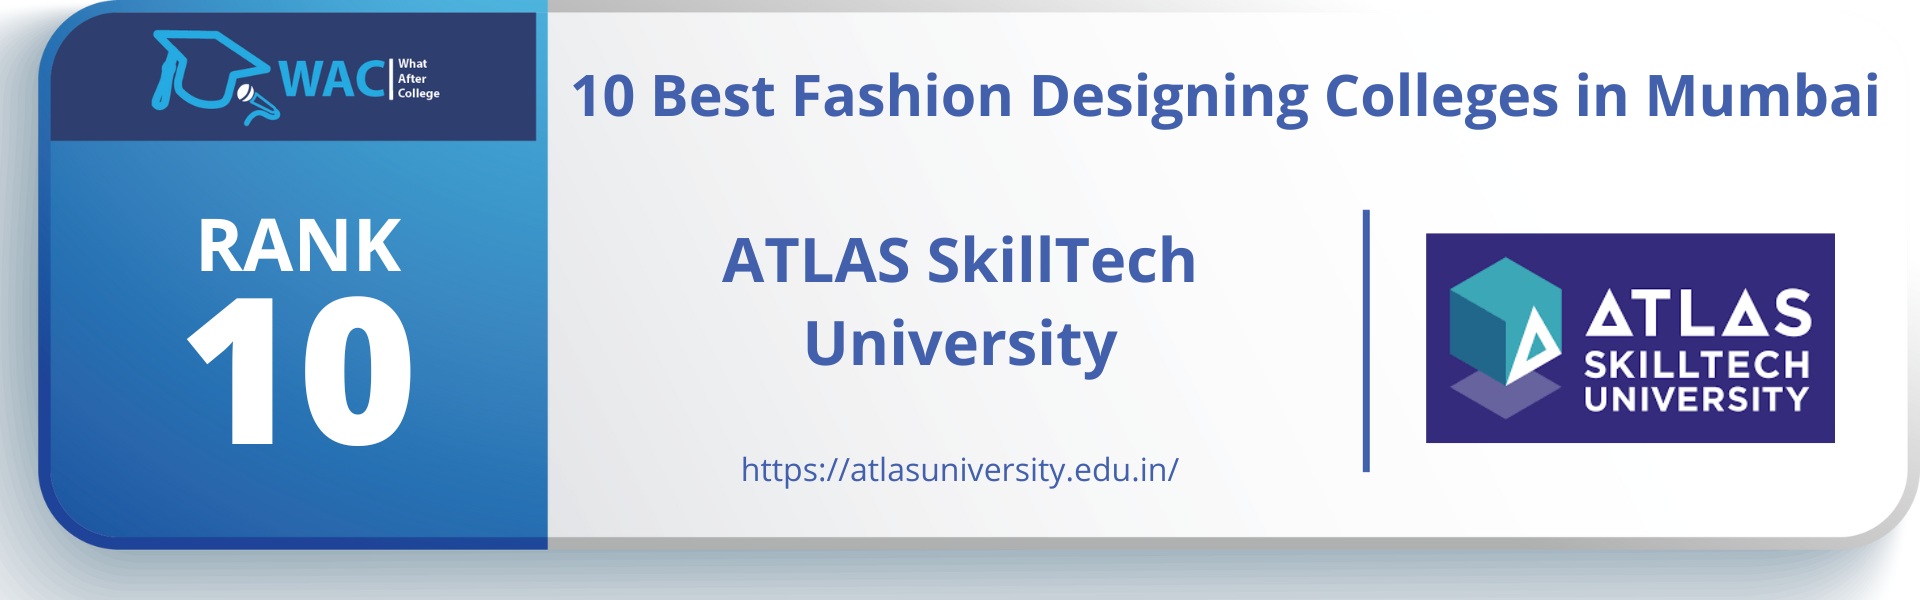 Rank: 10 ATLAS SkillTech University